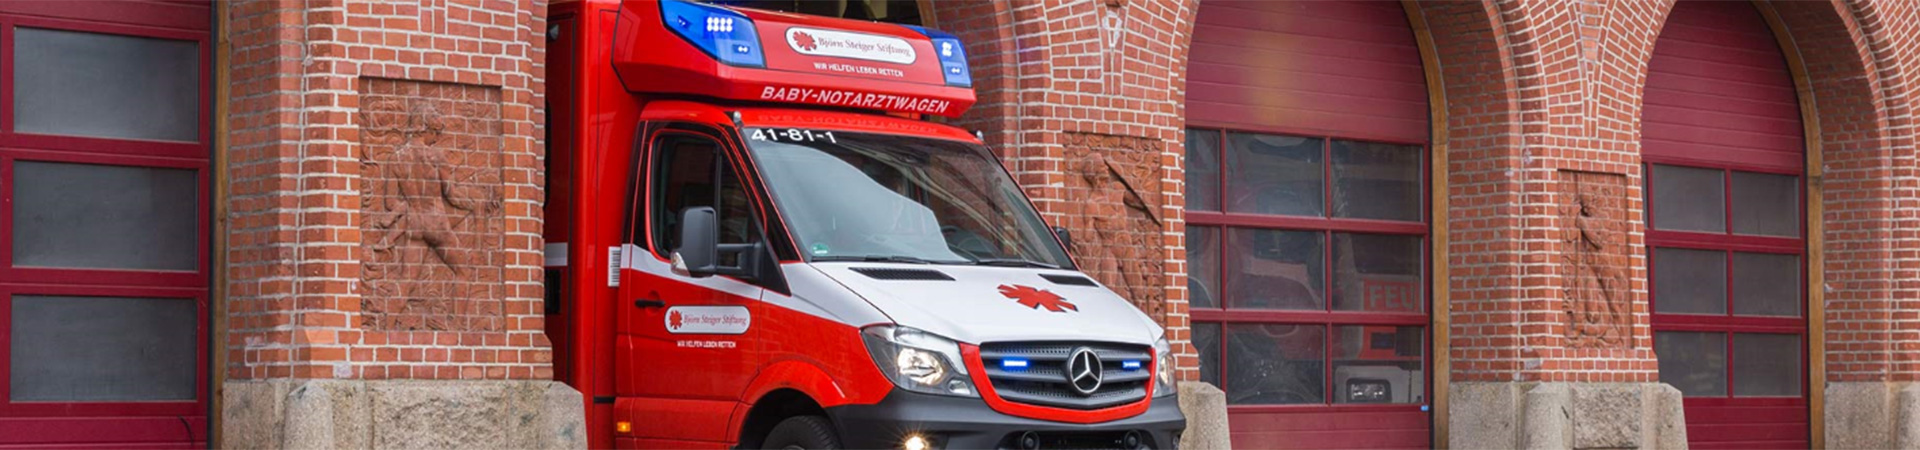 Patron of the emergency baby ambulance 